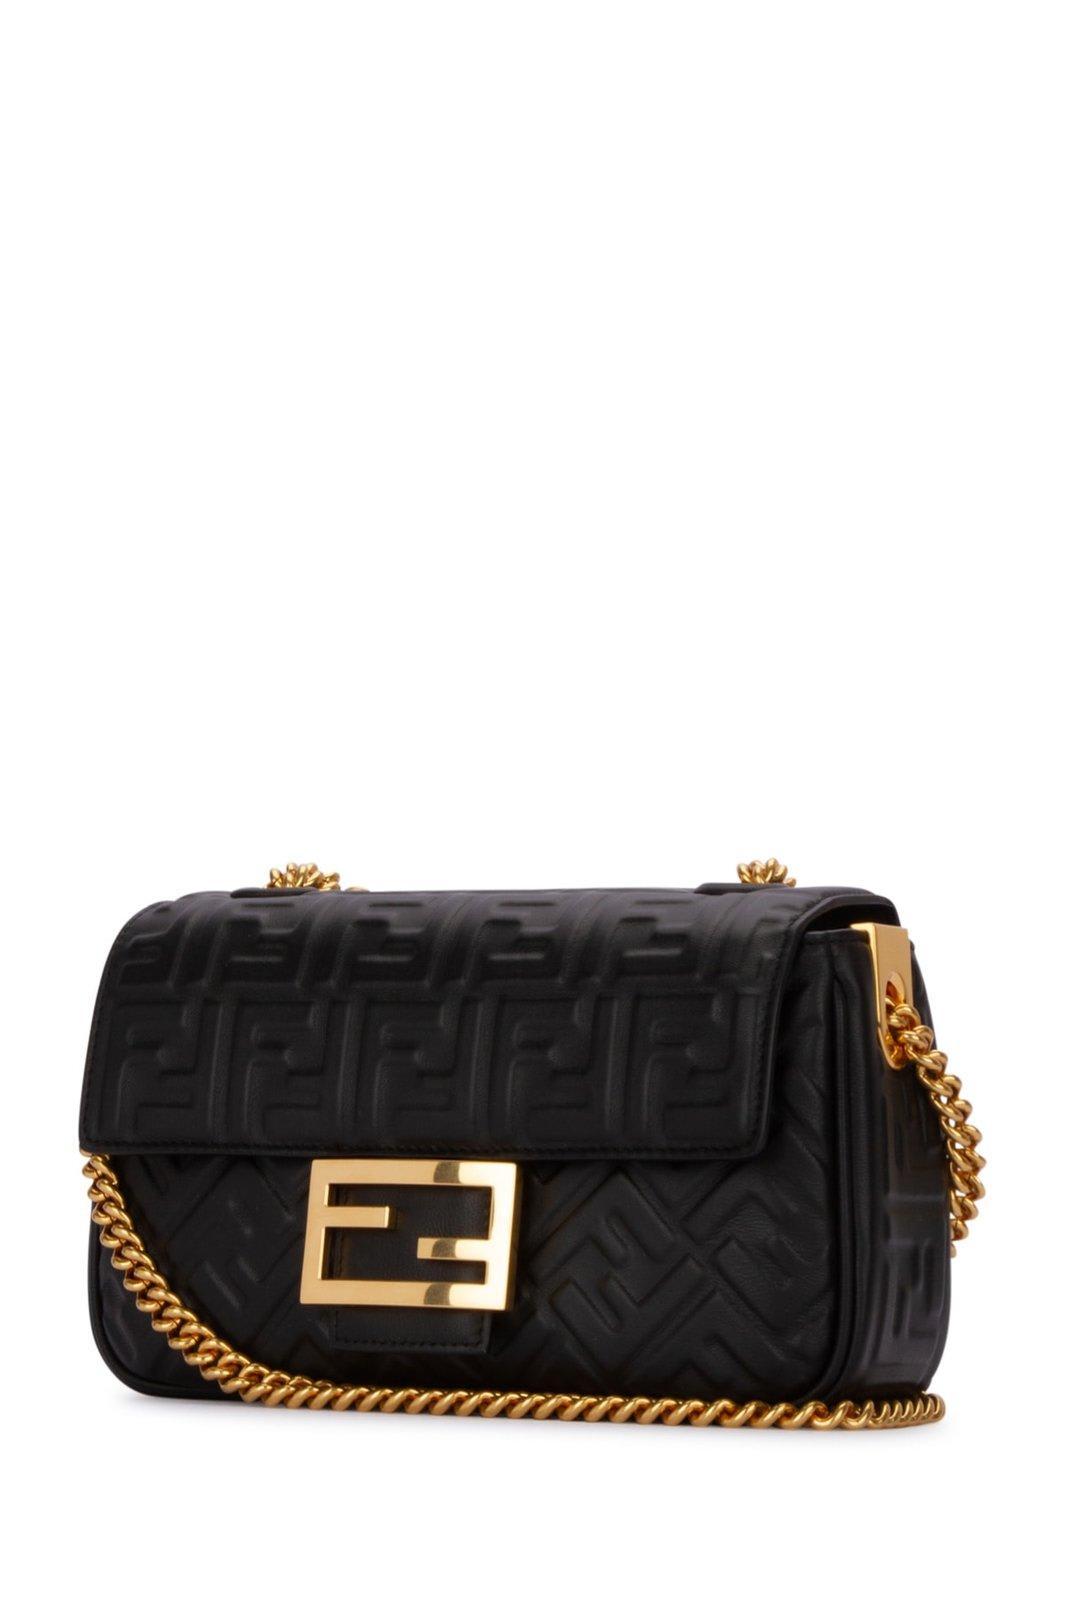 Fendi Baguette Bag In Nappa Leather With Embossed Ff Monogram in Black |  Lyst